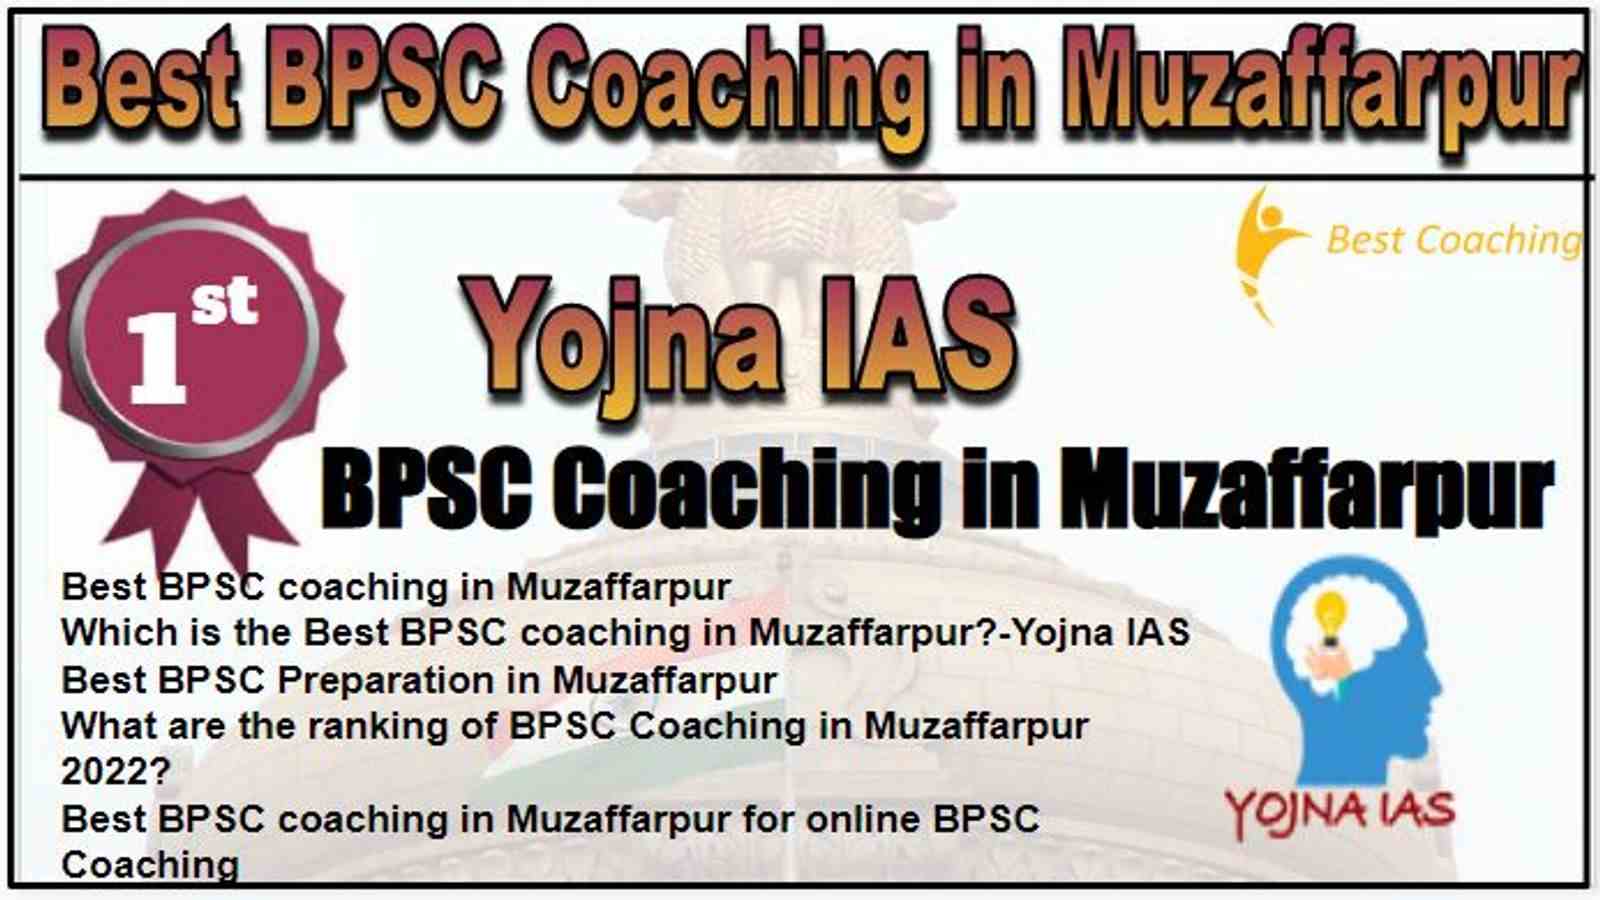 Rank 1 Best BPSC Coaching in Muzaffarpur